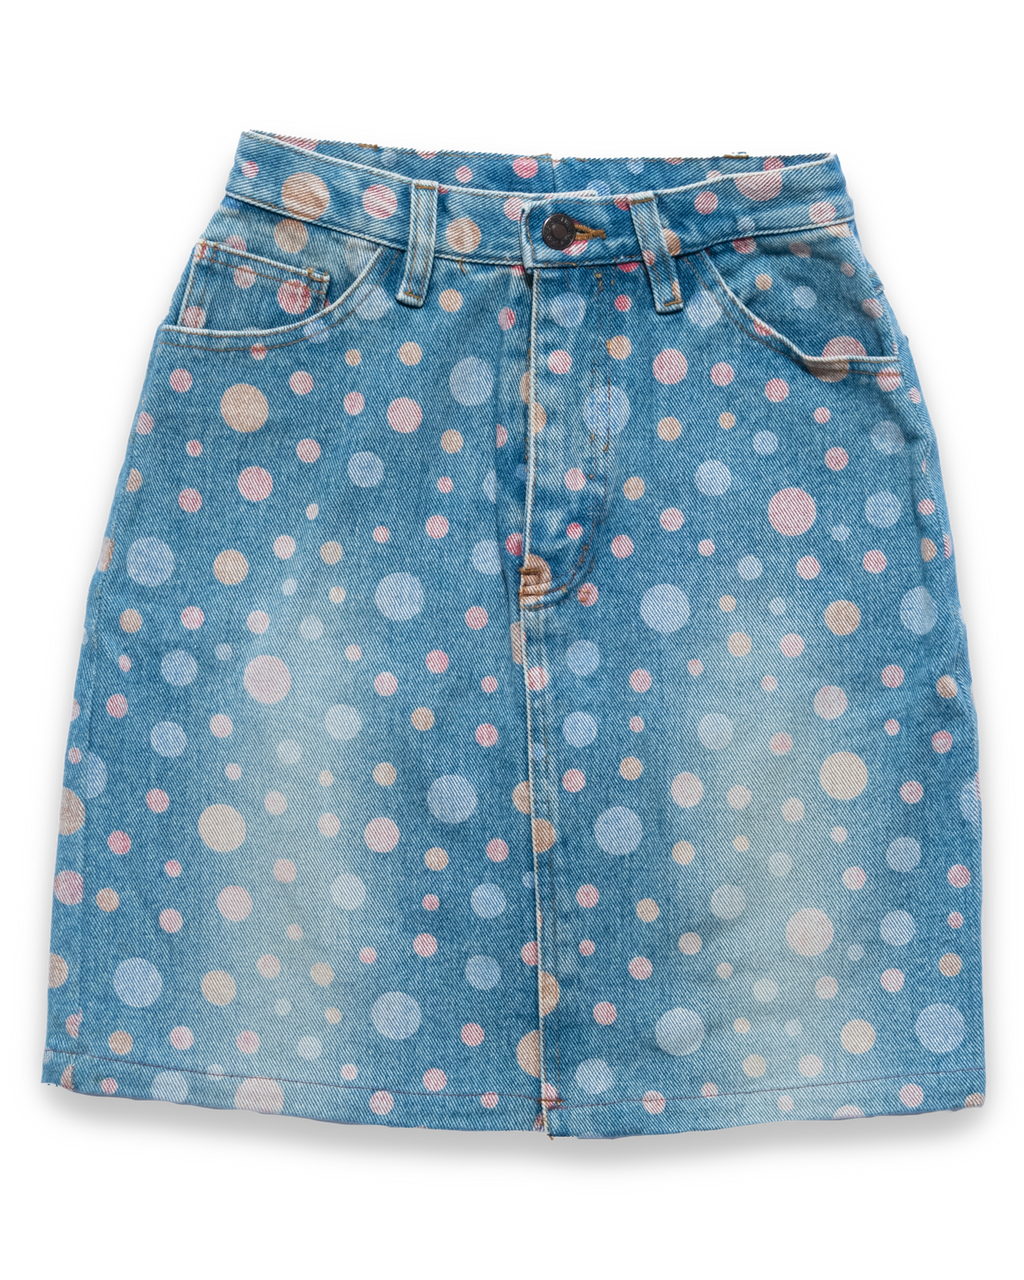 Bubbles Denim Skirt